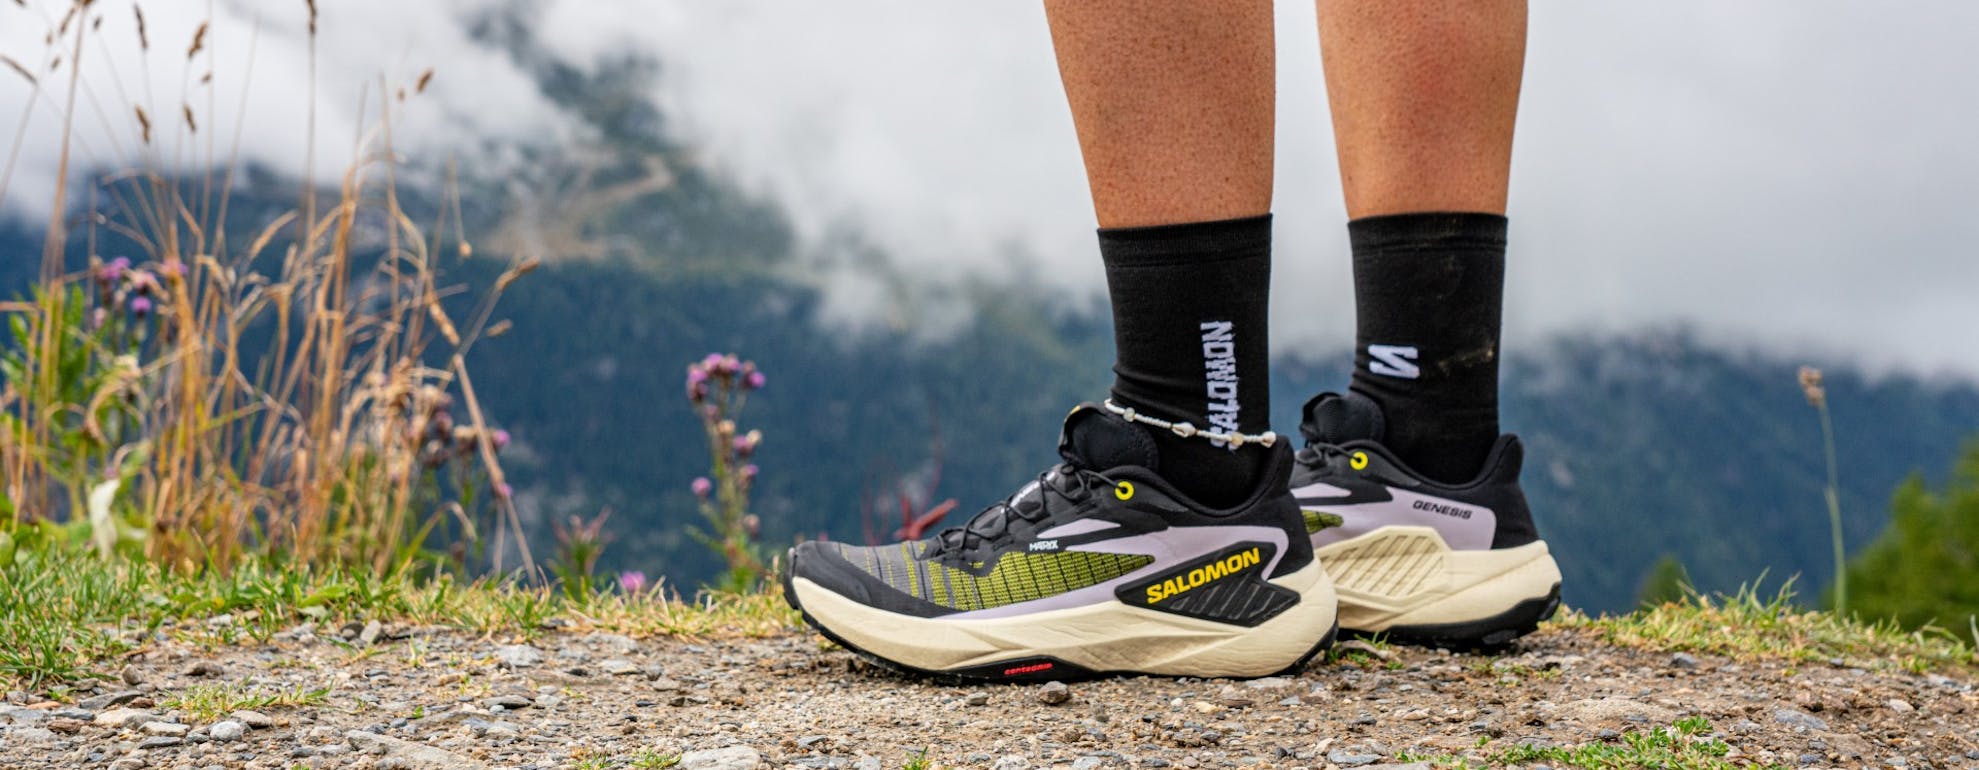 salomon-genesis-trail-running-shoes